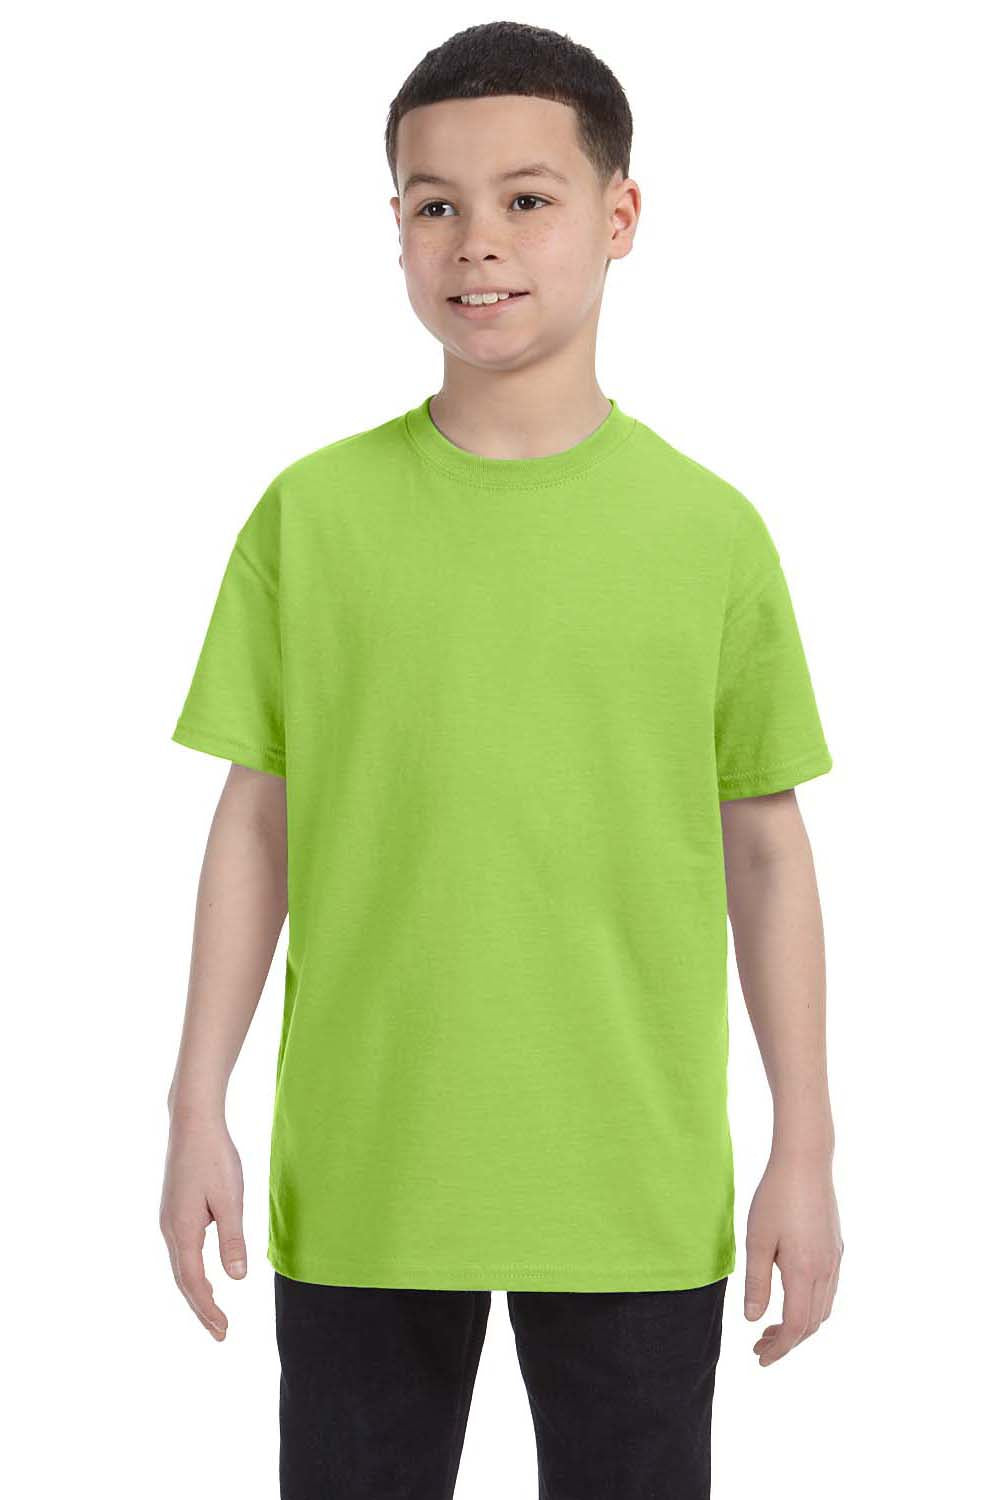 Jerzees 29B Youth Dri-Power Moisture Wicking Short Sleeve Crewneck T-Shirt Neon Green Front